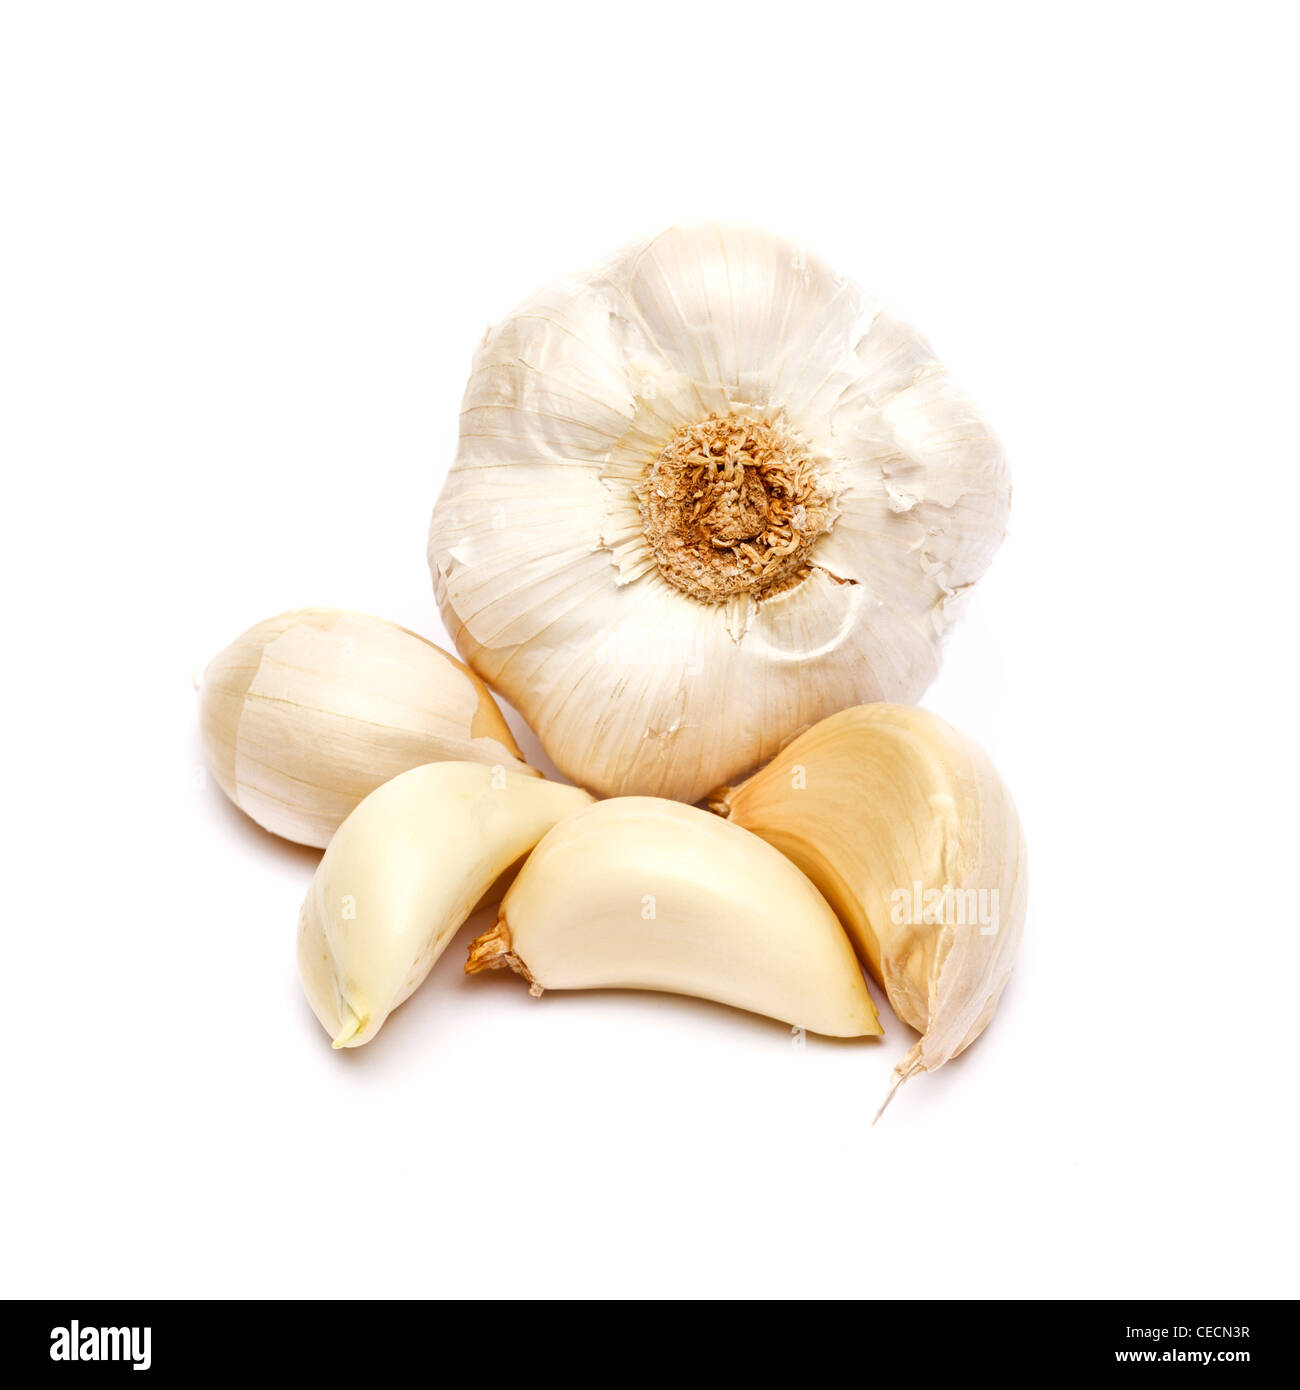 Garlic and garlic cloves detail on white background Stock Photo